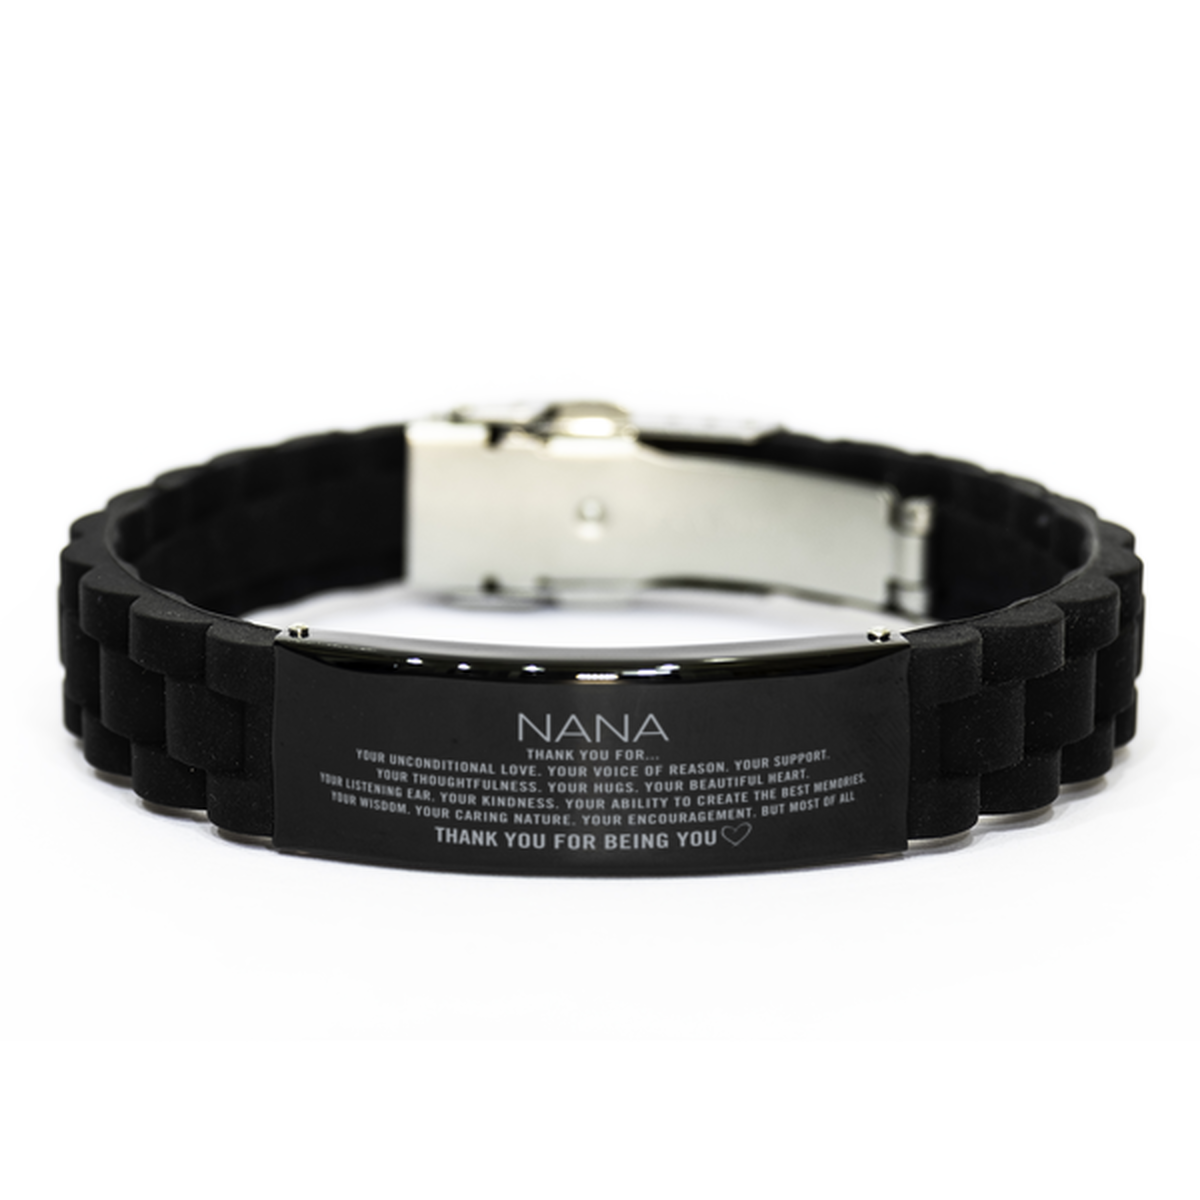 Nana Black Glidelock Clasp Bracelet Custom, Engraved Gifts For Nana Christmas Graduation Birthday Gifts for Men Women Nana Thank you for Your unconditional love